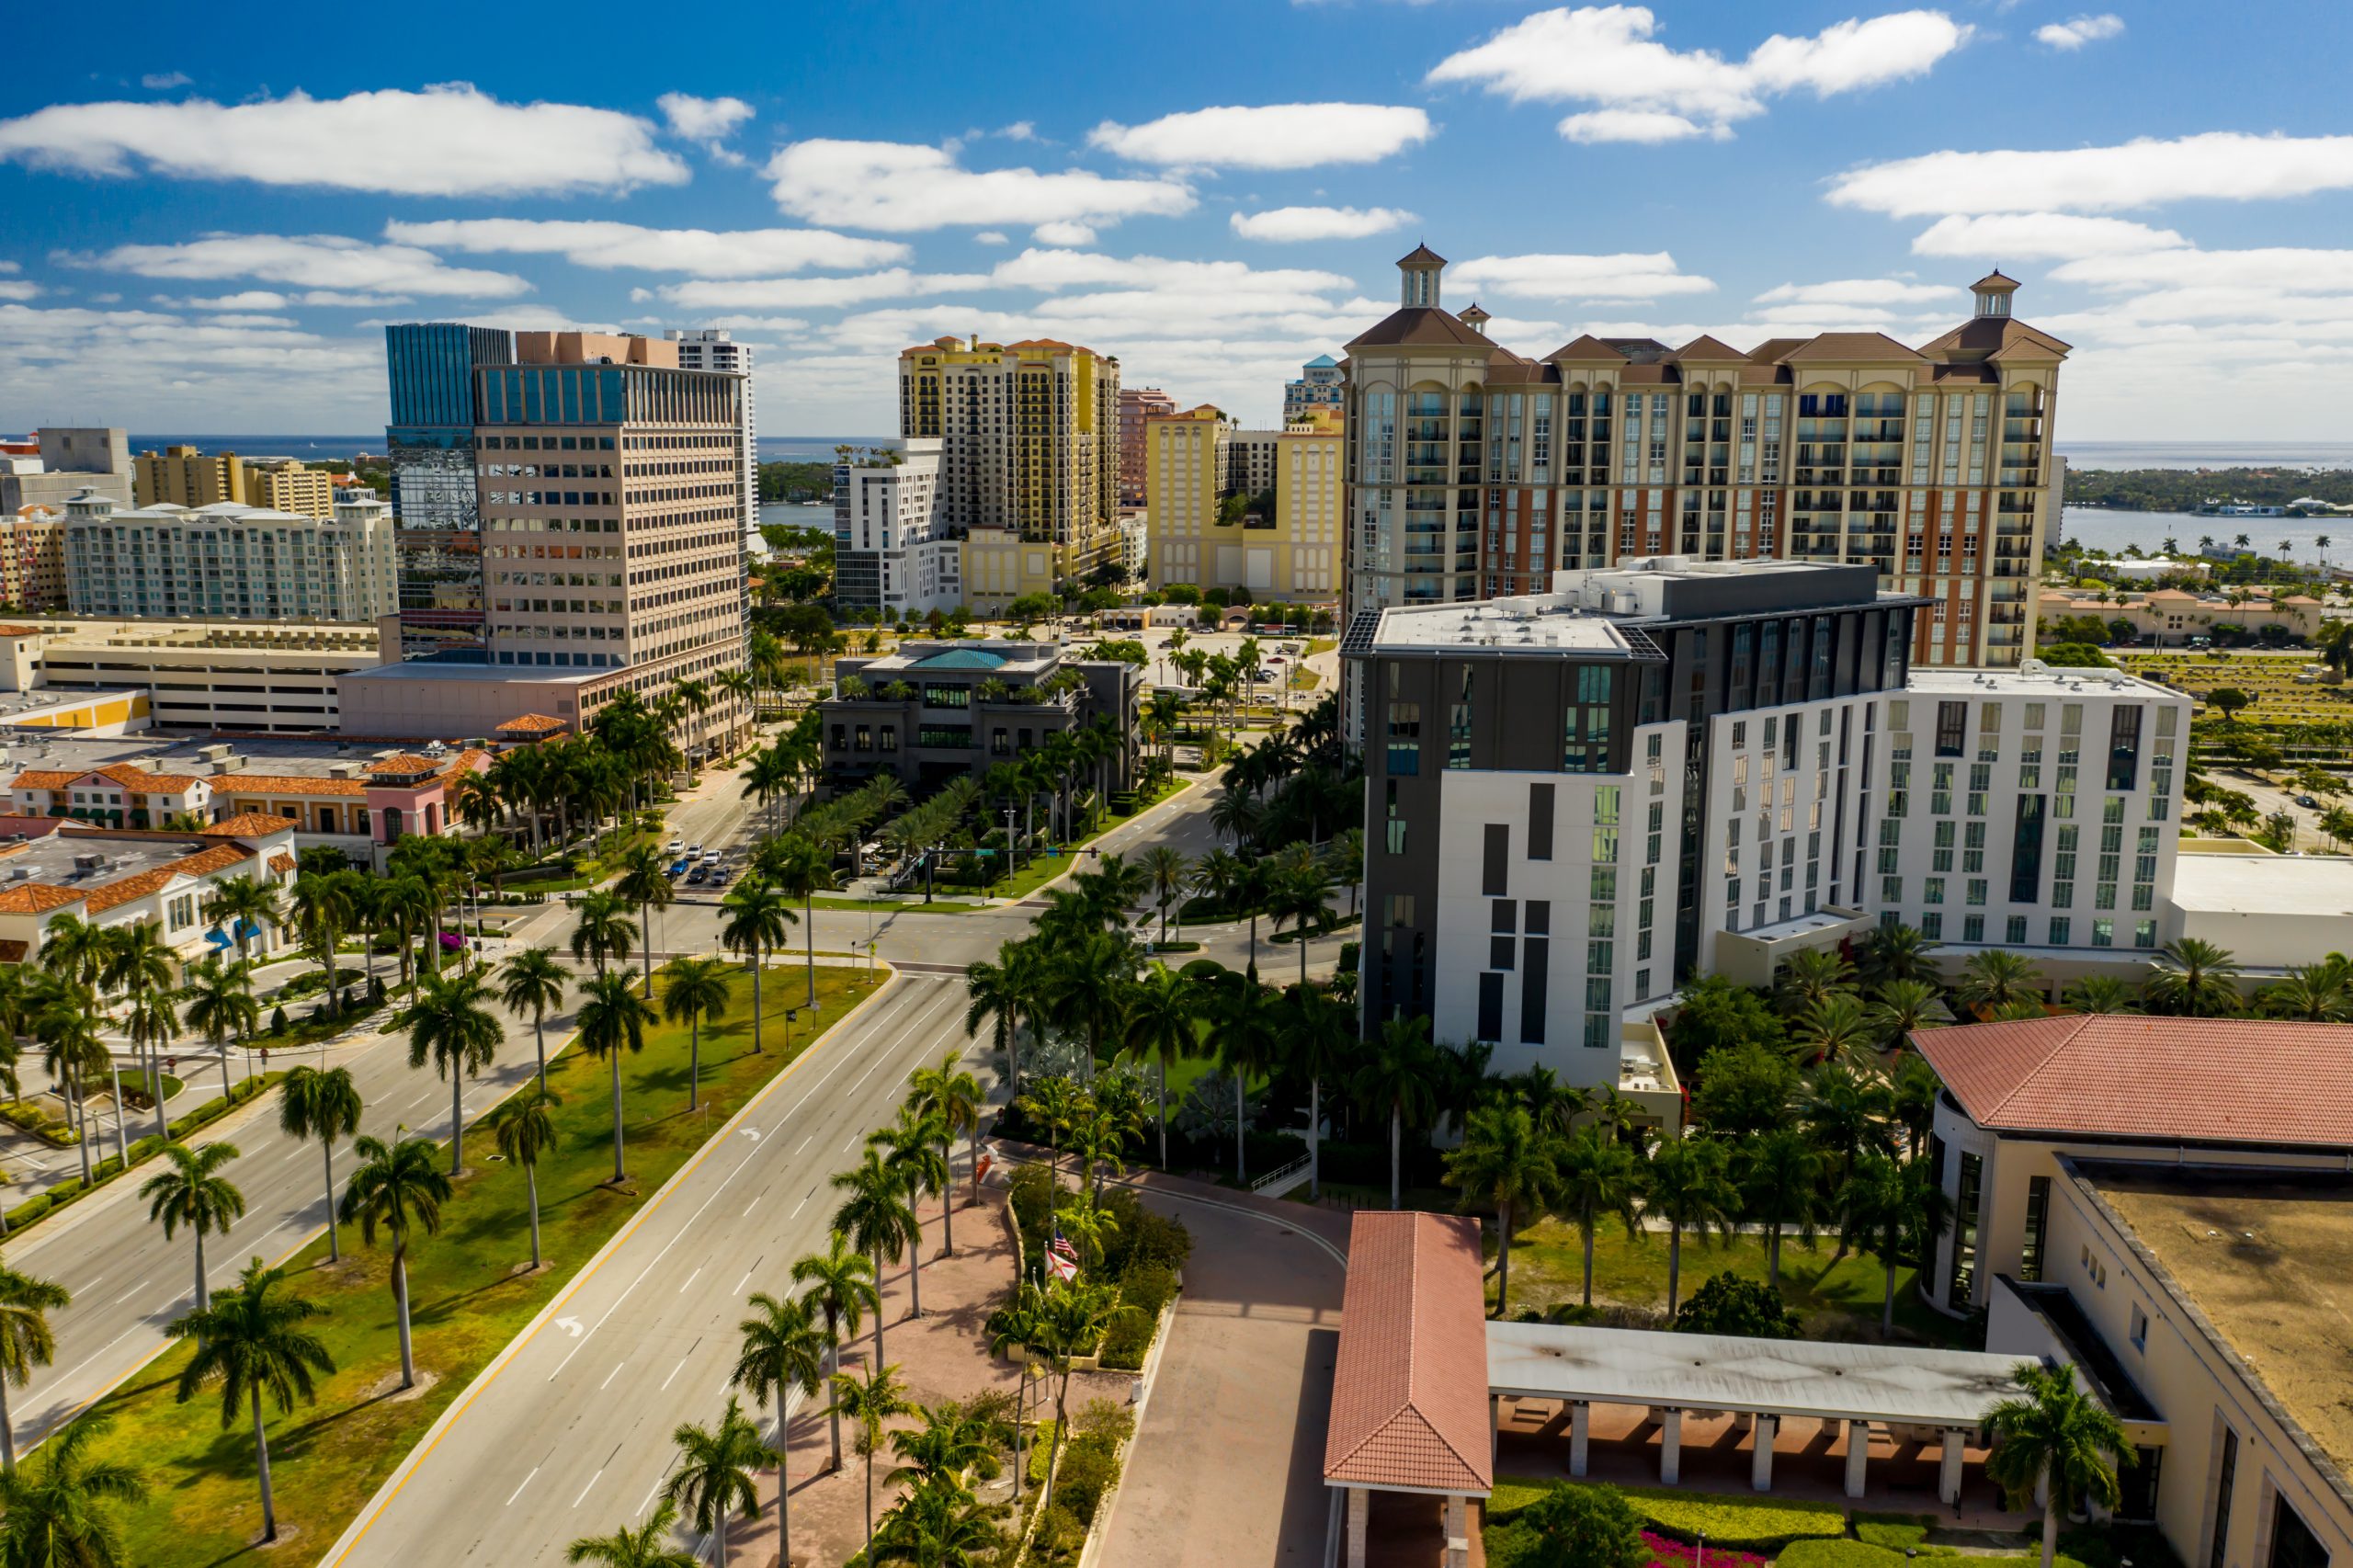 Aerials of Downtown West Palm Beach FL